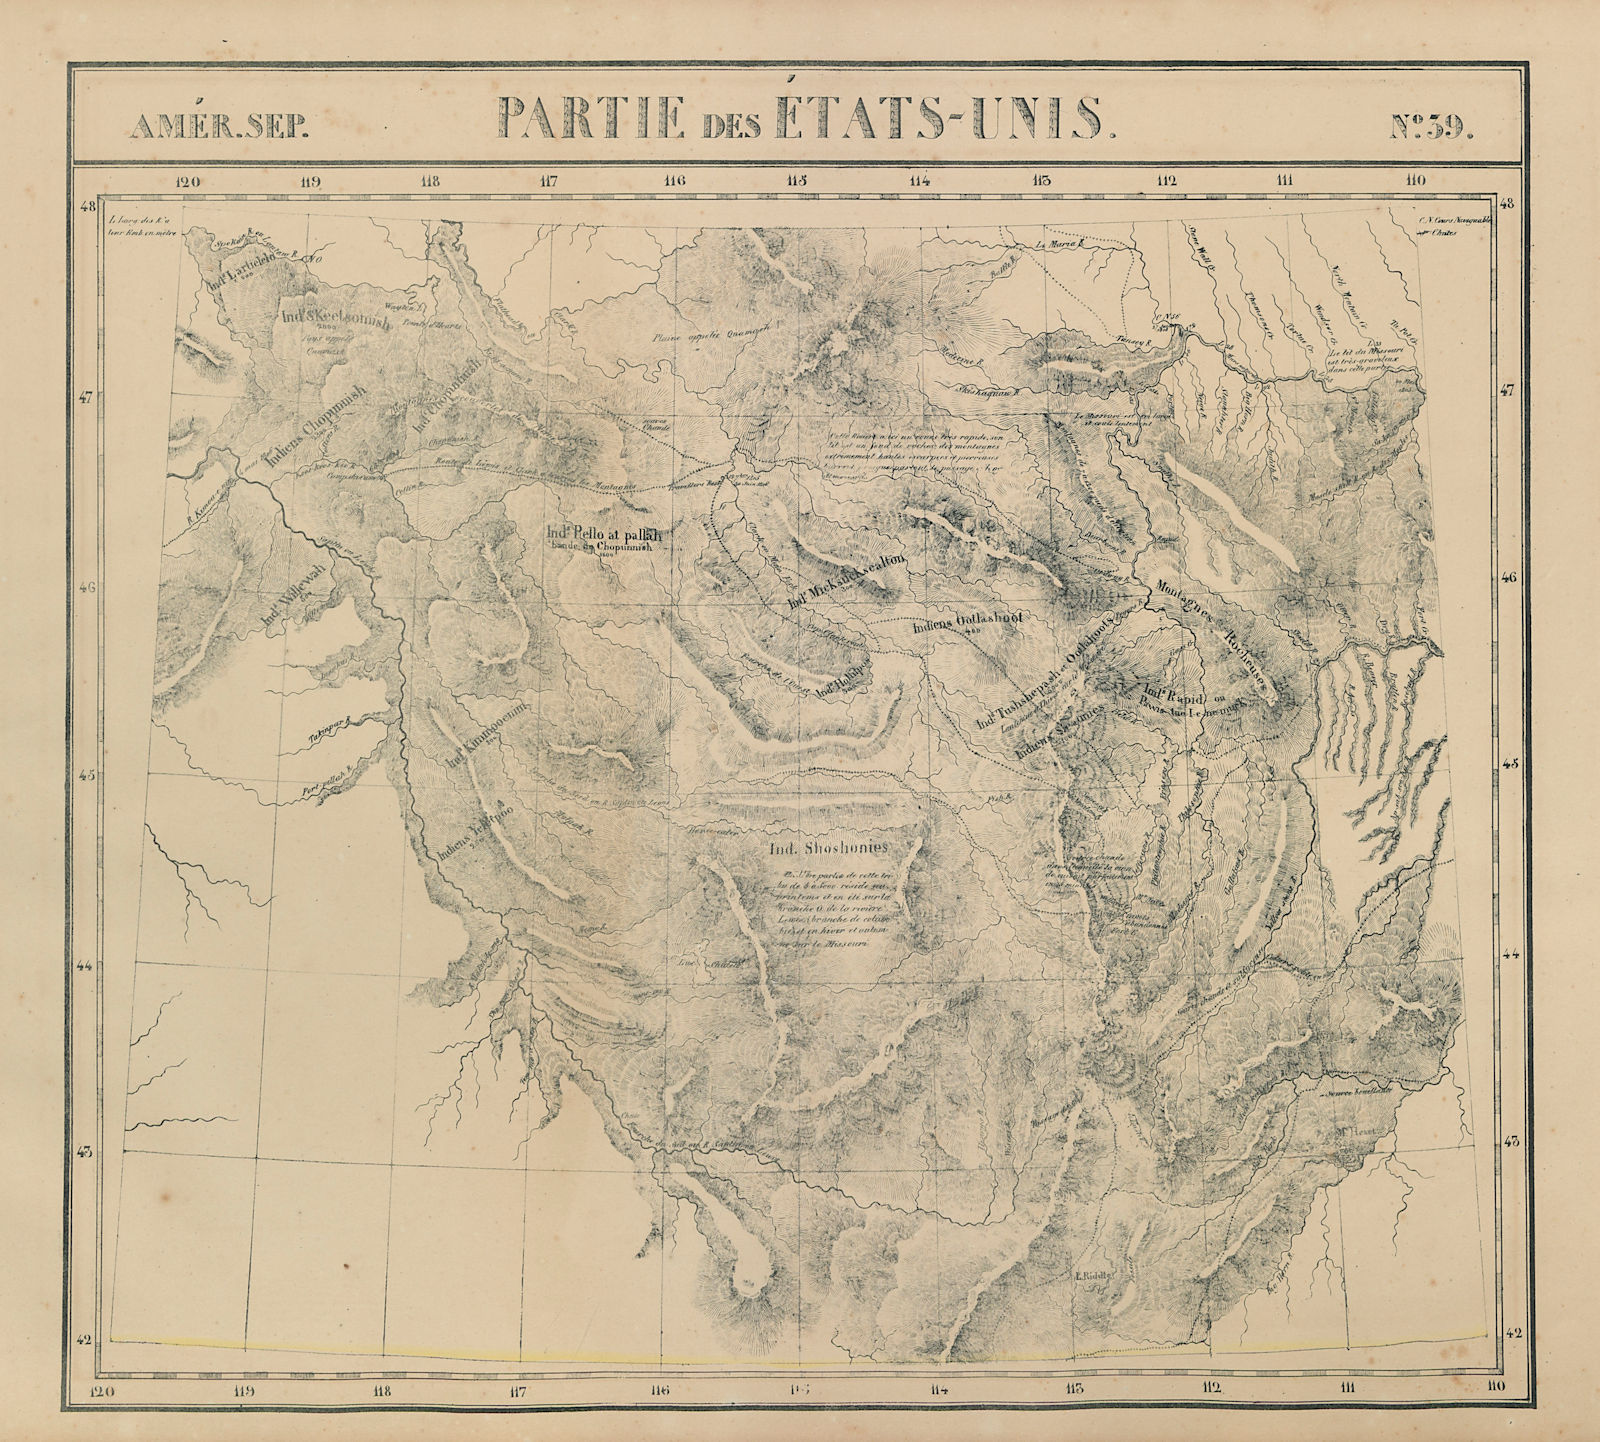 Amér. Sep. Partie des États-Unis #39 Idaho Montana Wyoming VANDERMAELEN 1827 map